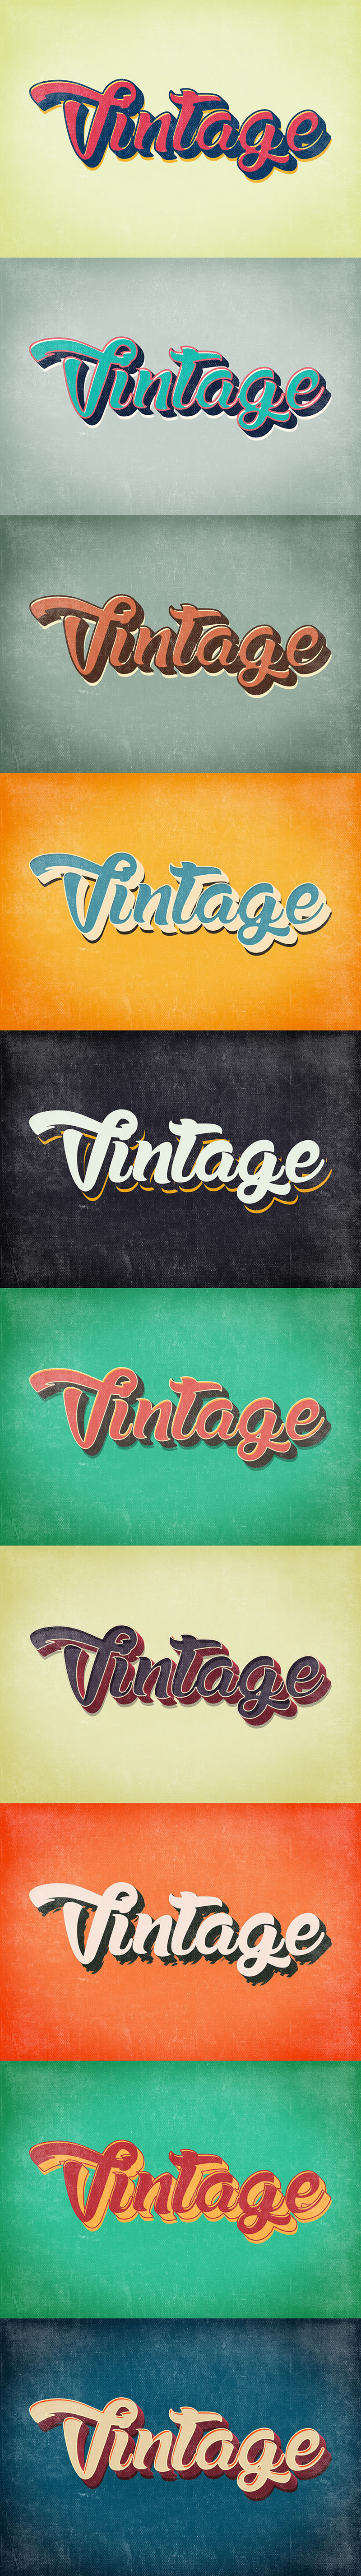 10 Free Vintage Text Style For Adobe Illustrator